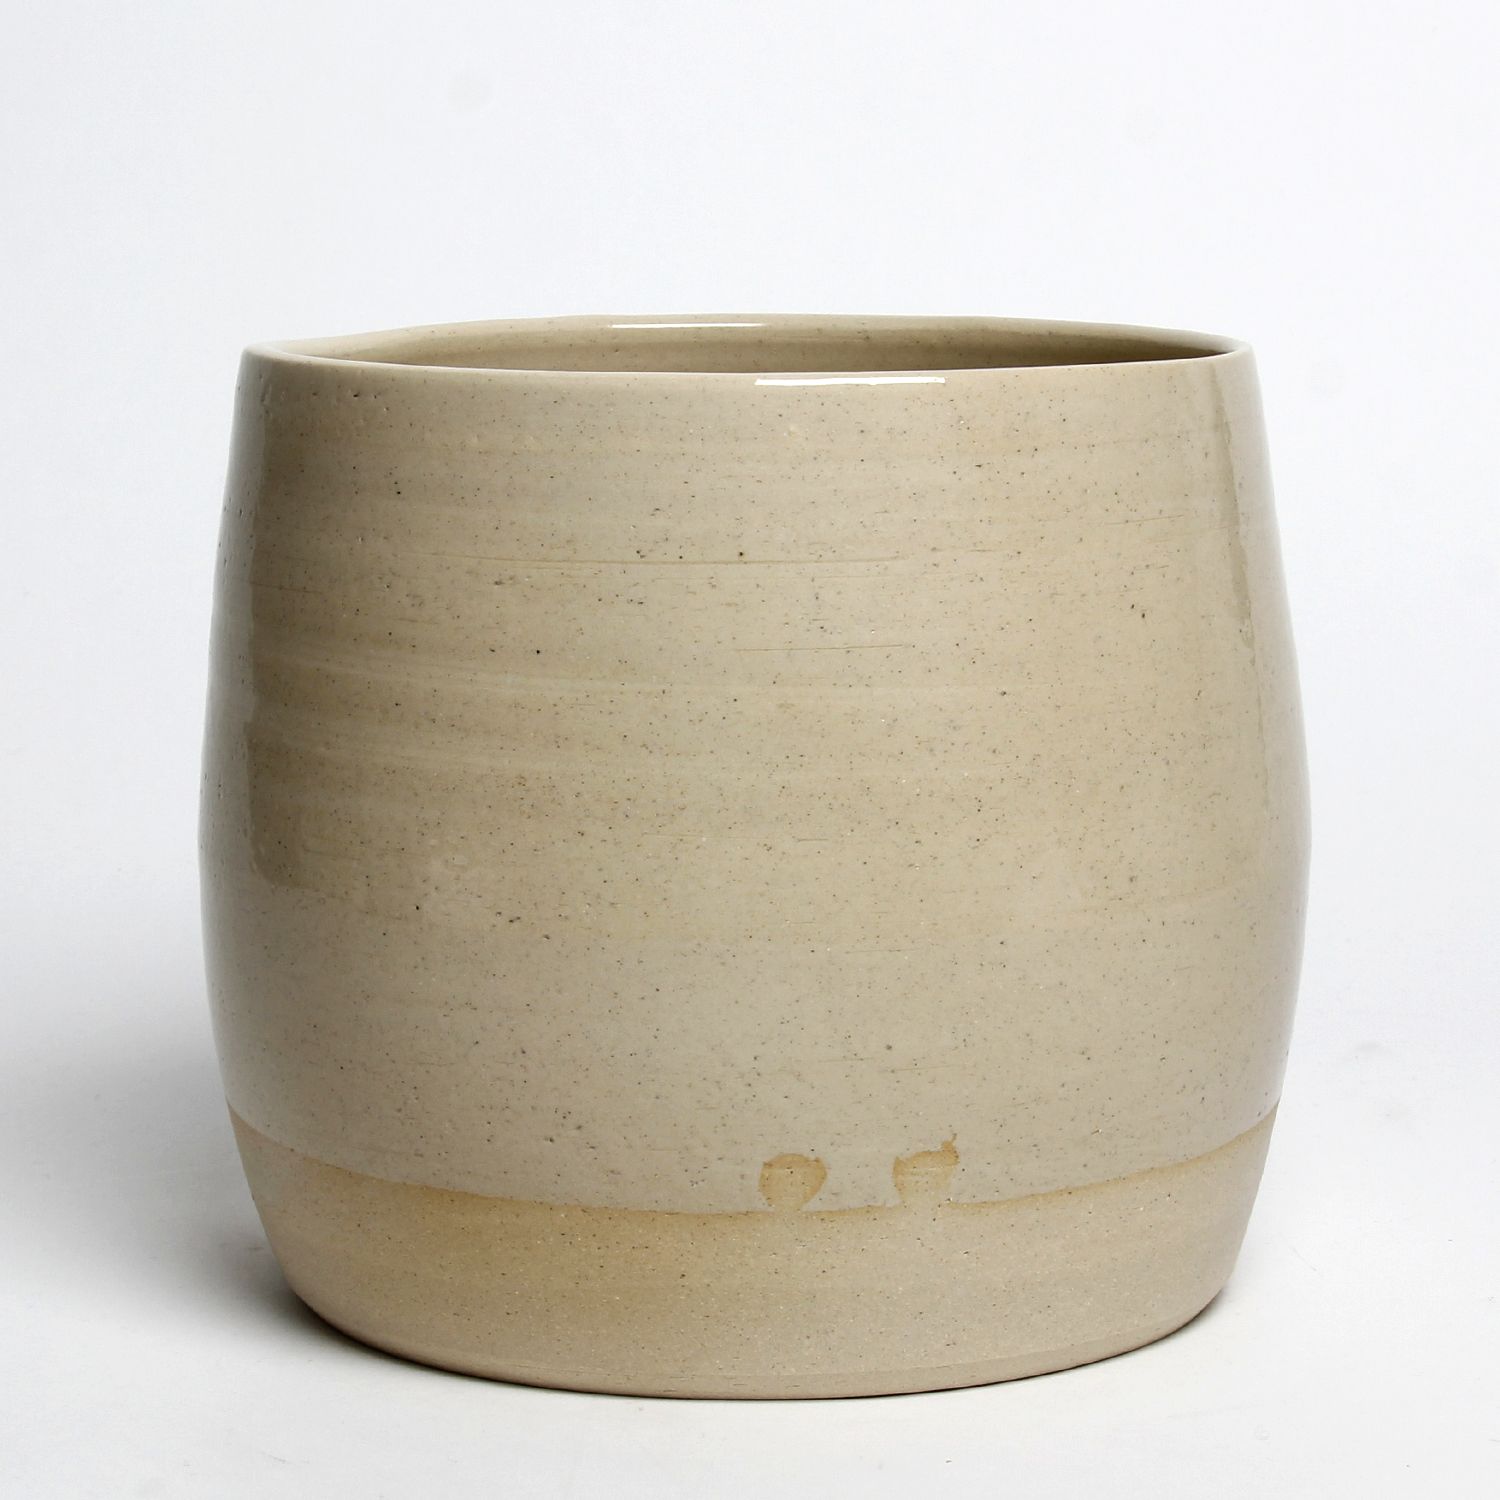 Suzanne Morrisette: Pebble Planter Vase Product Image 2 of 2